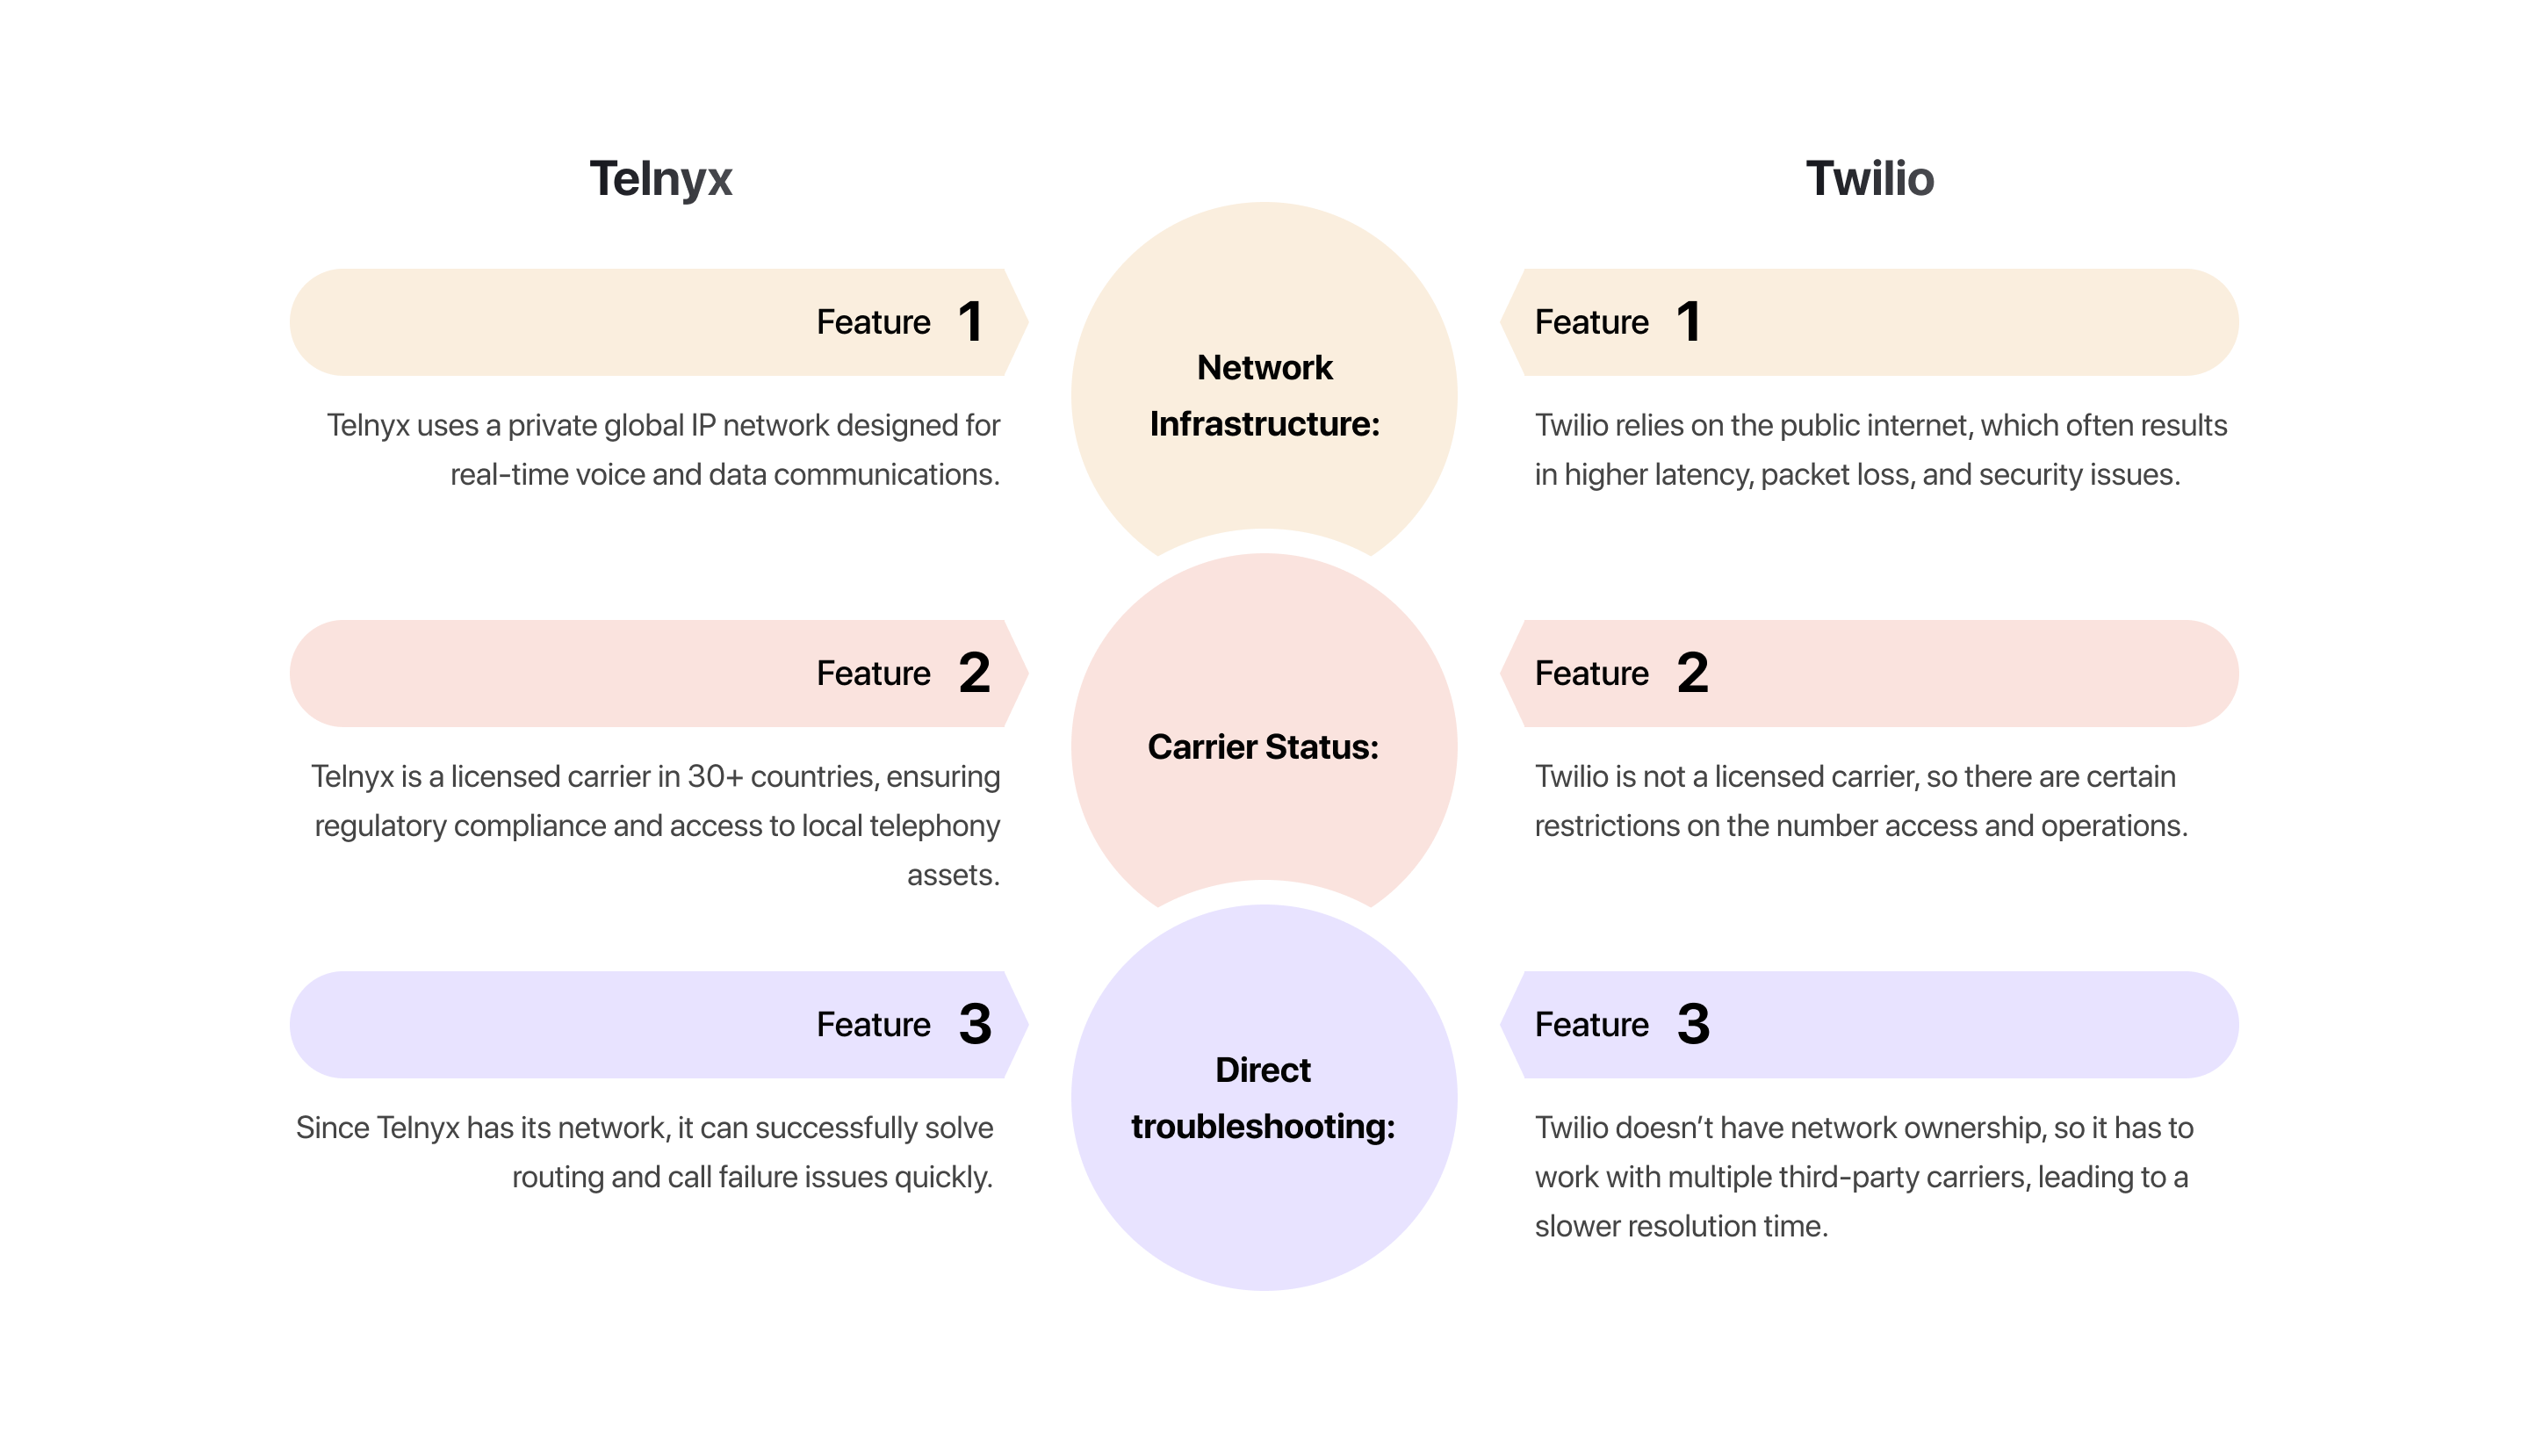 telnyx features